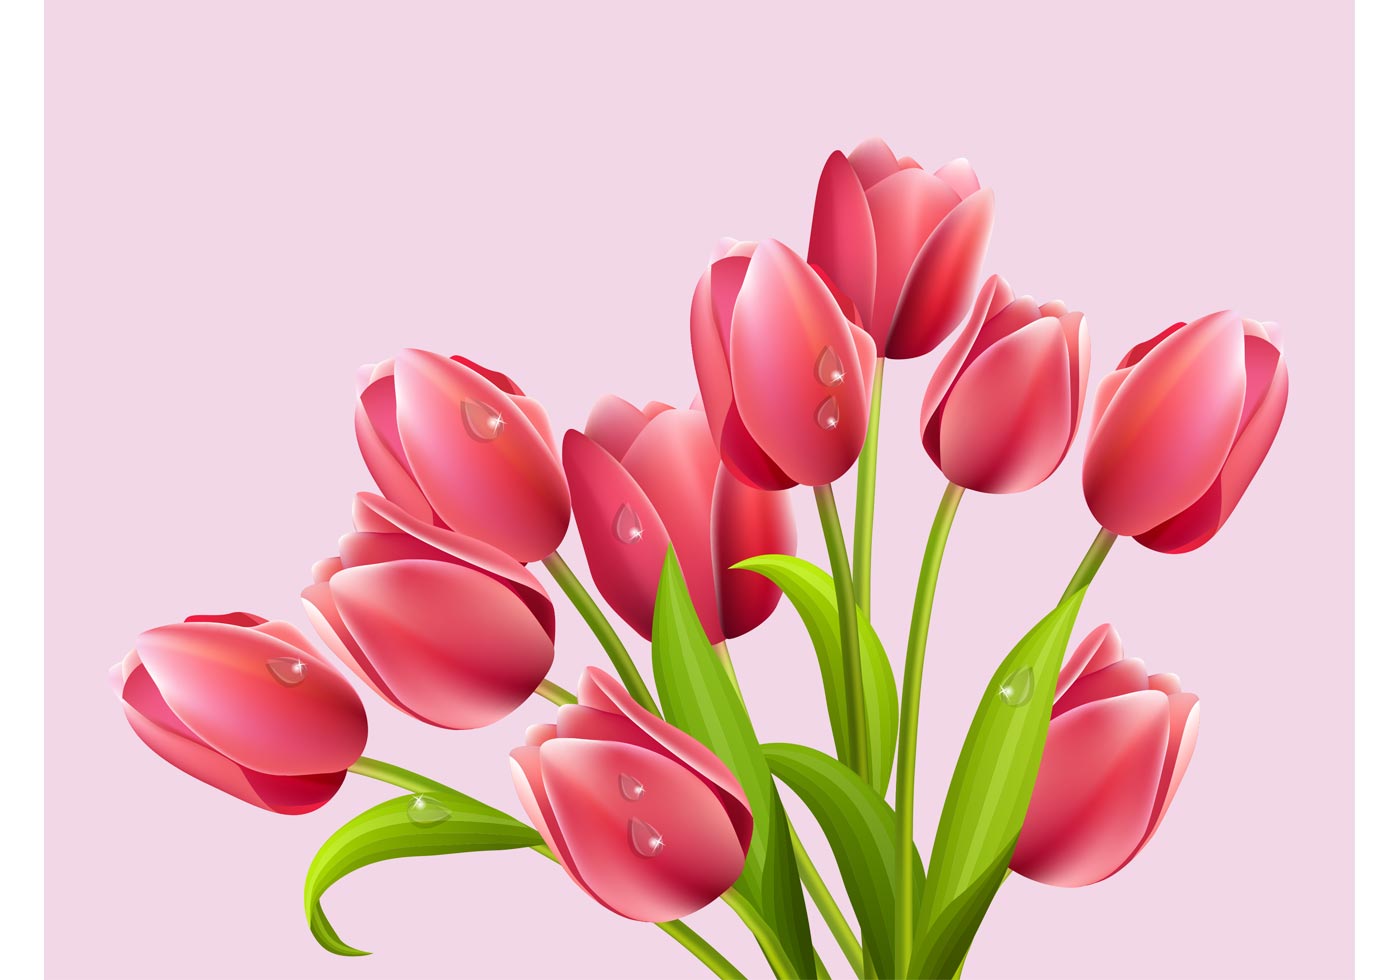  Tulip  Free Vector  Art 12306 Free Downloads 